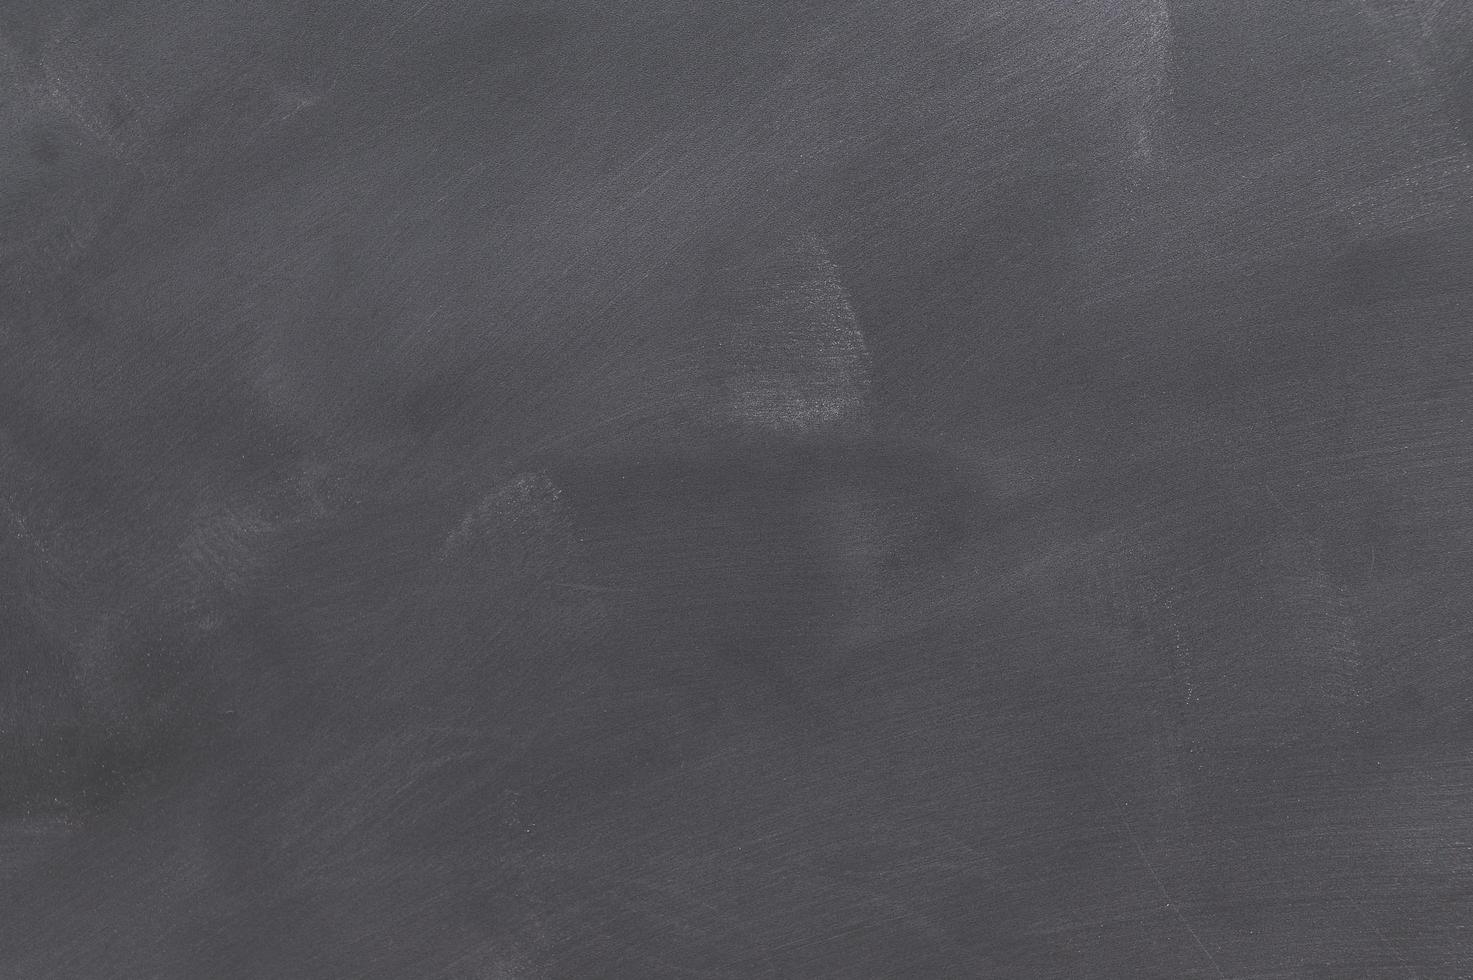 Chalk dust stained blackboard background photo